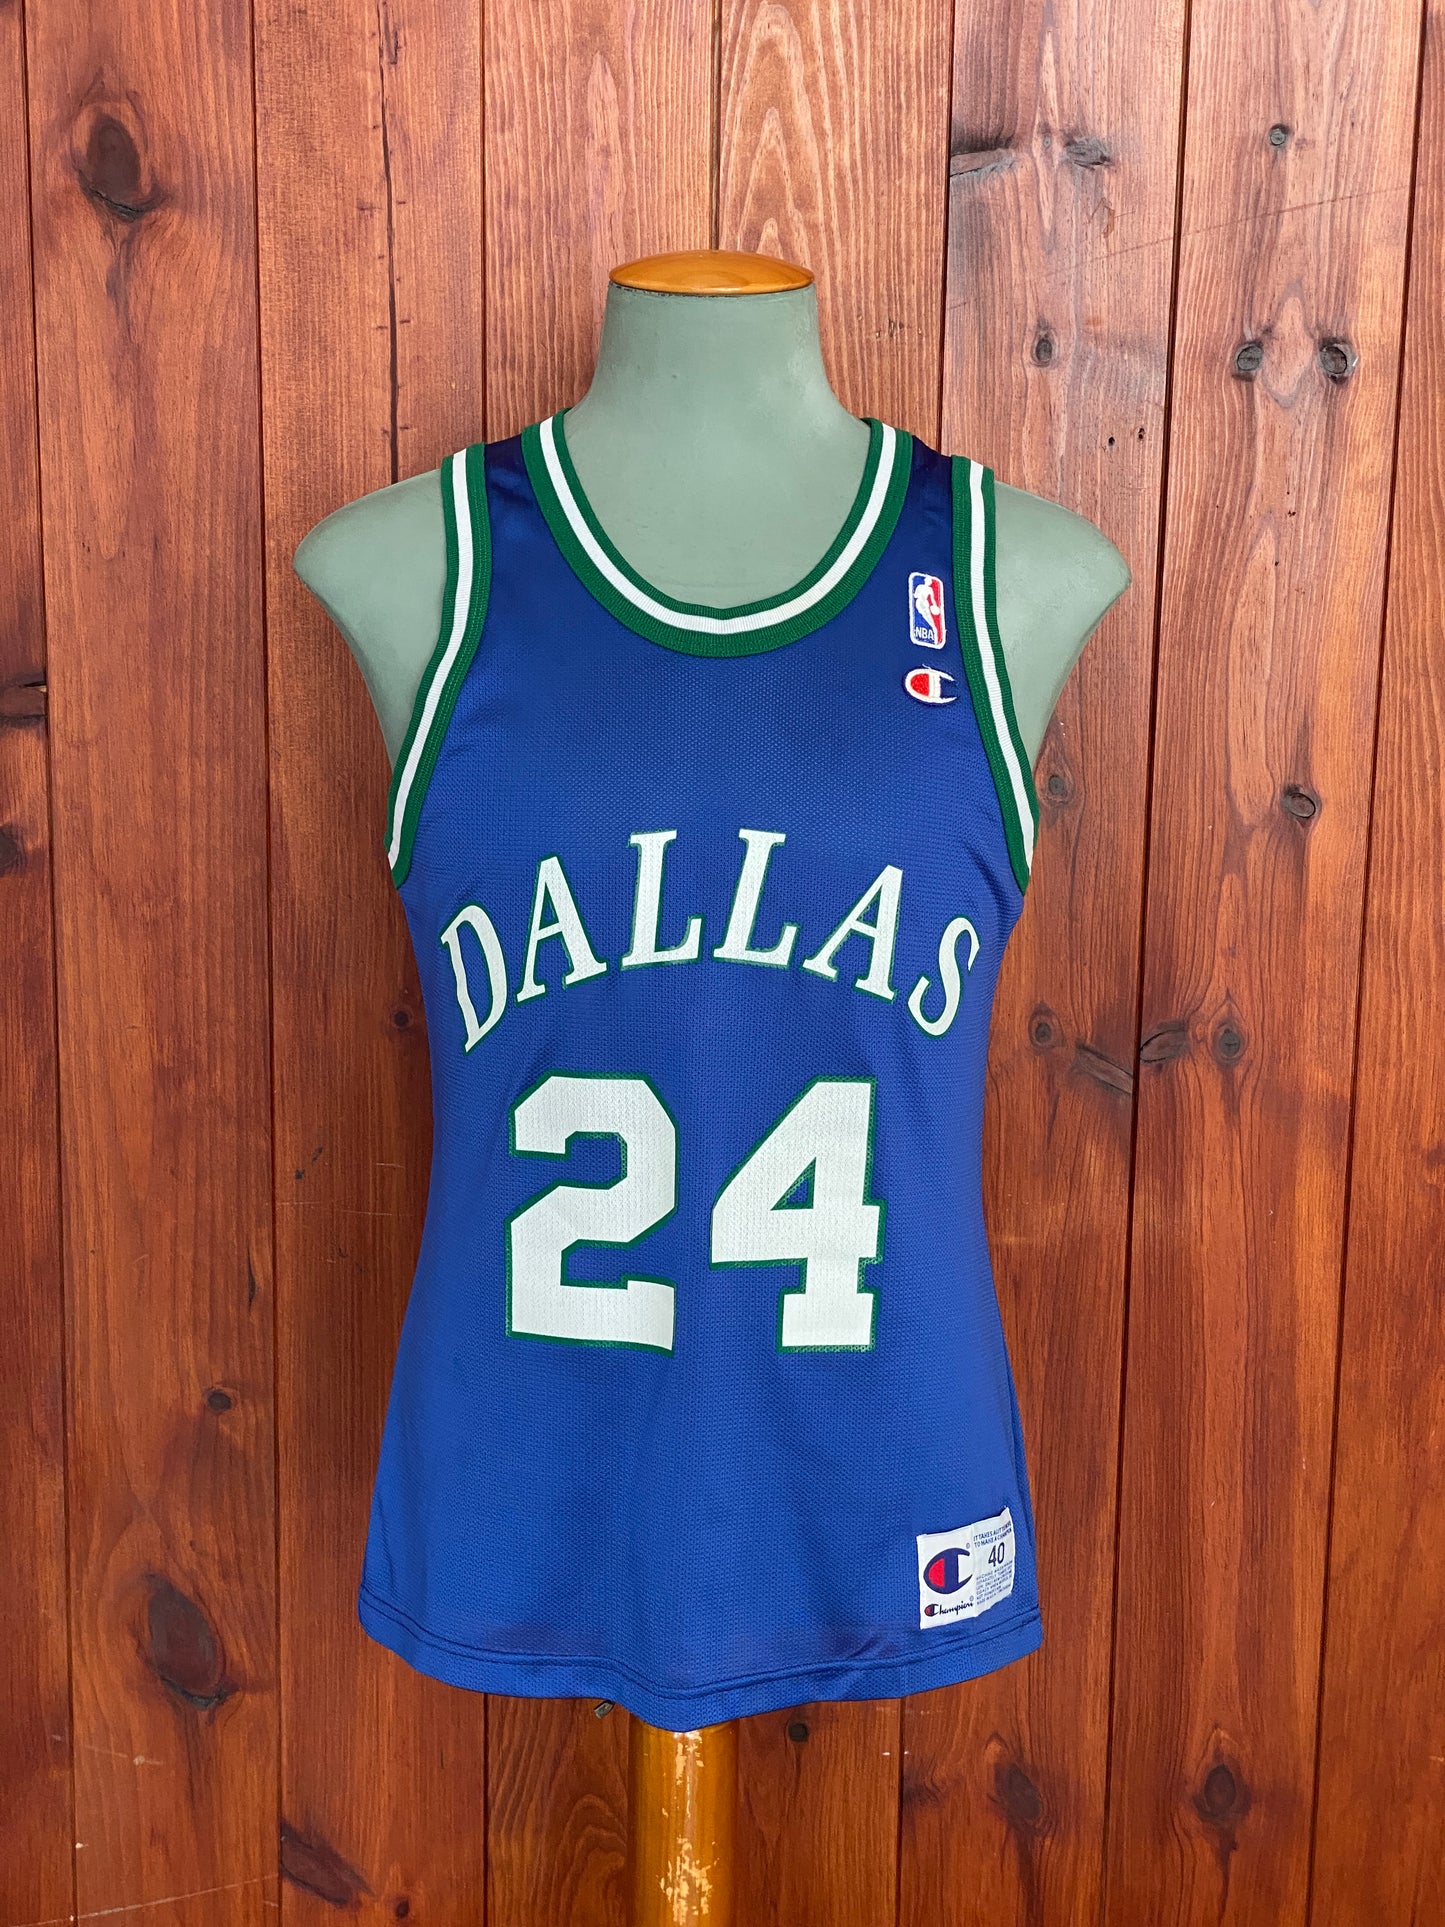 Size 40. Rare Vintage 90s jersey NBA Dallas Mavericks #24 Jackson Made In USA by Champion